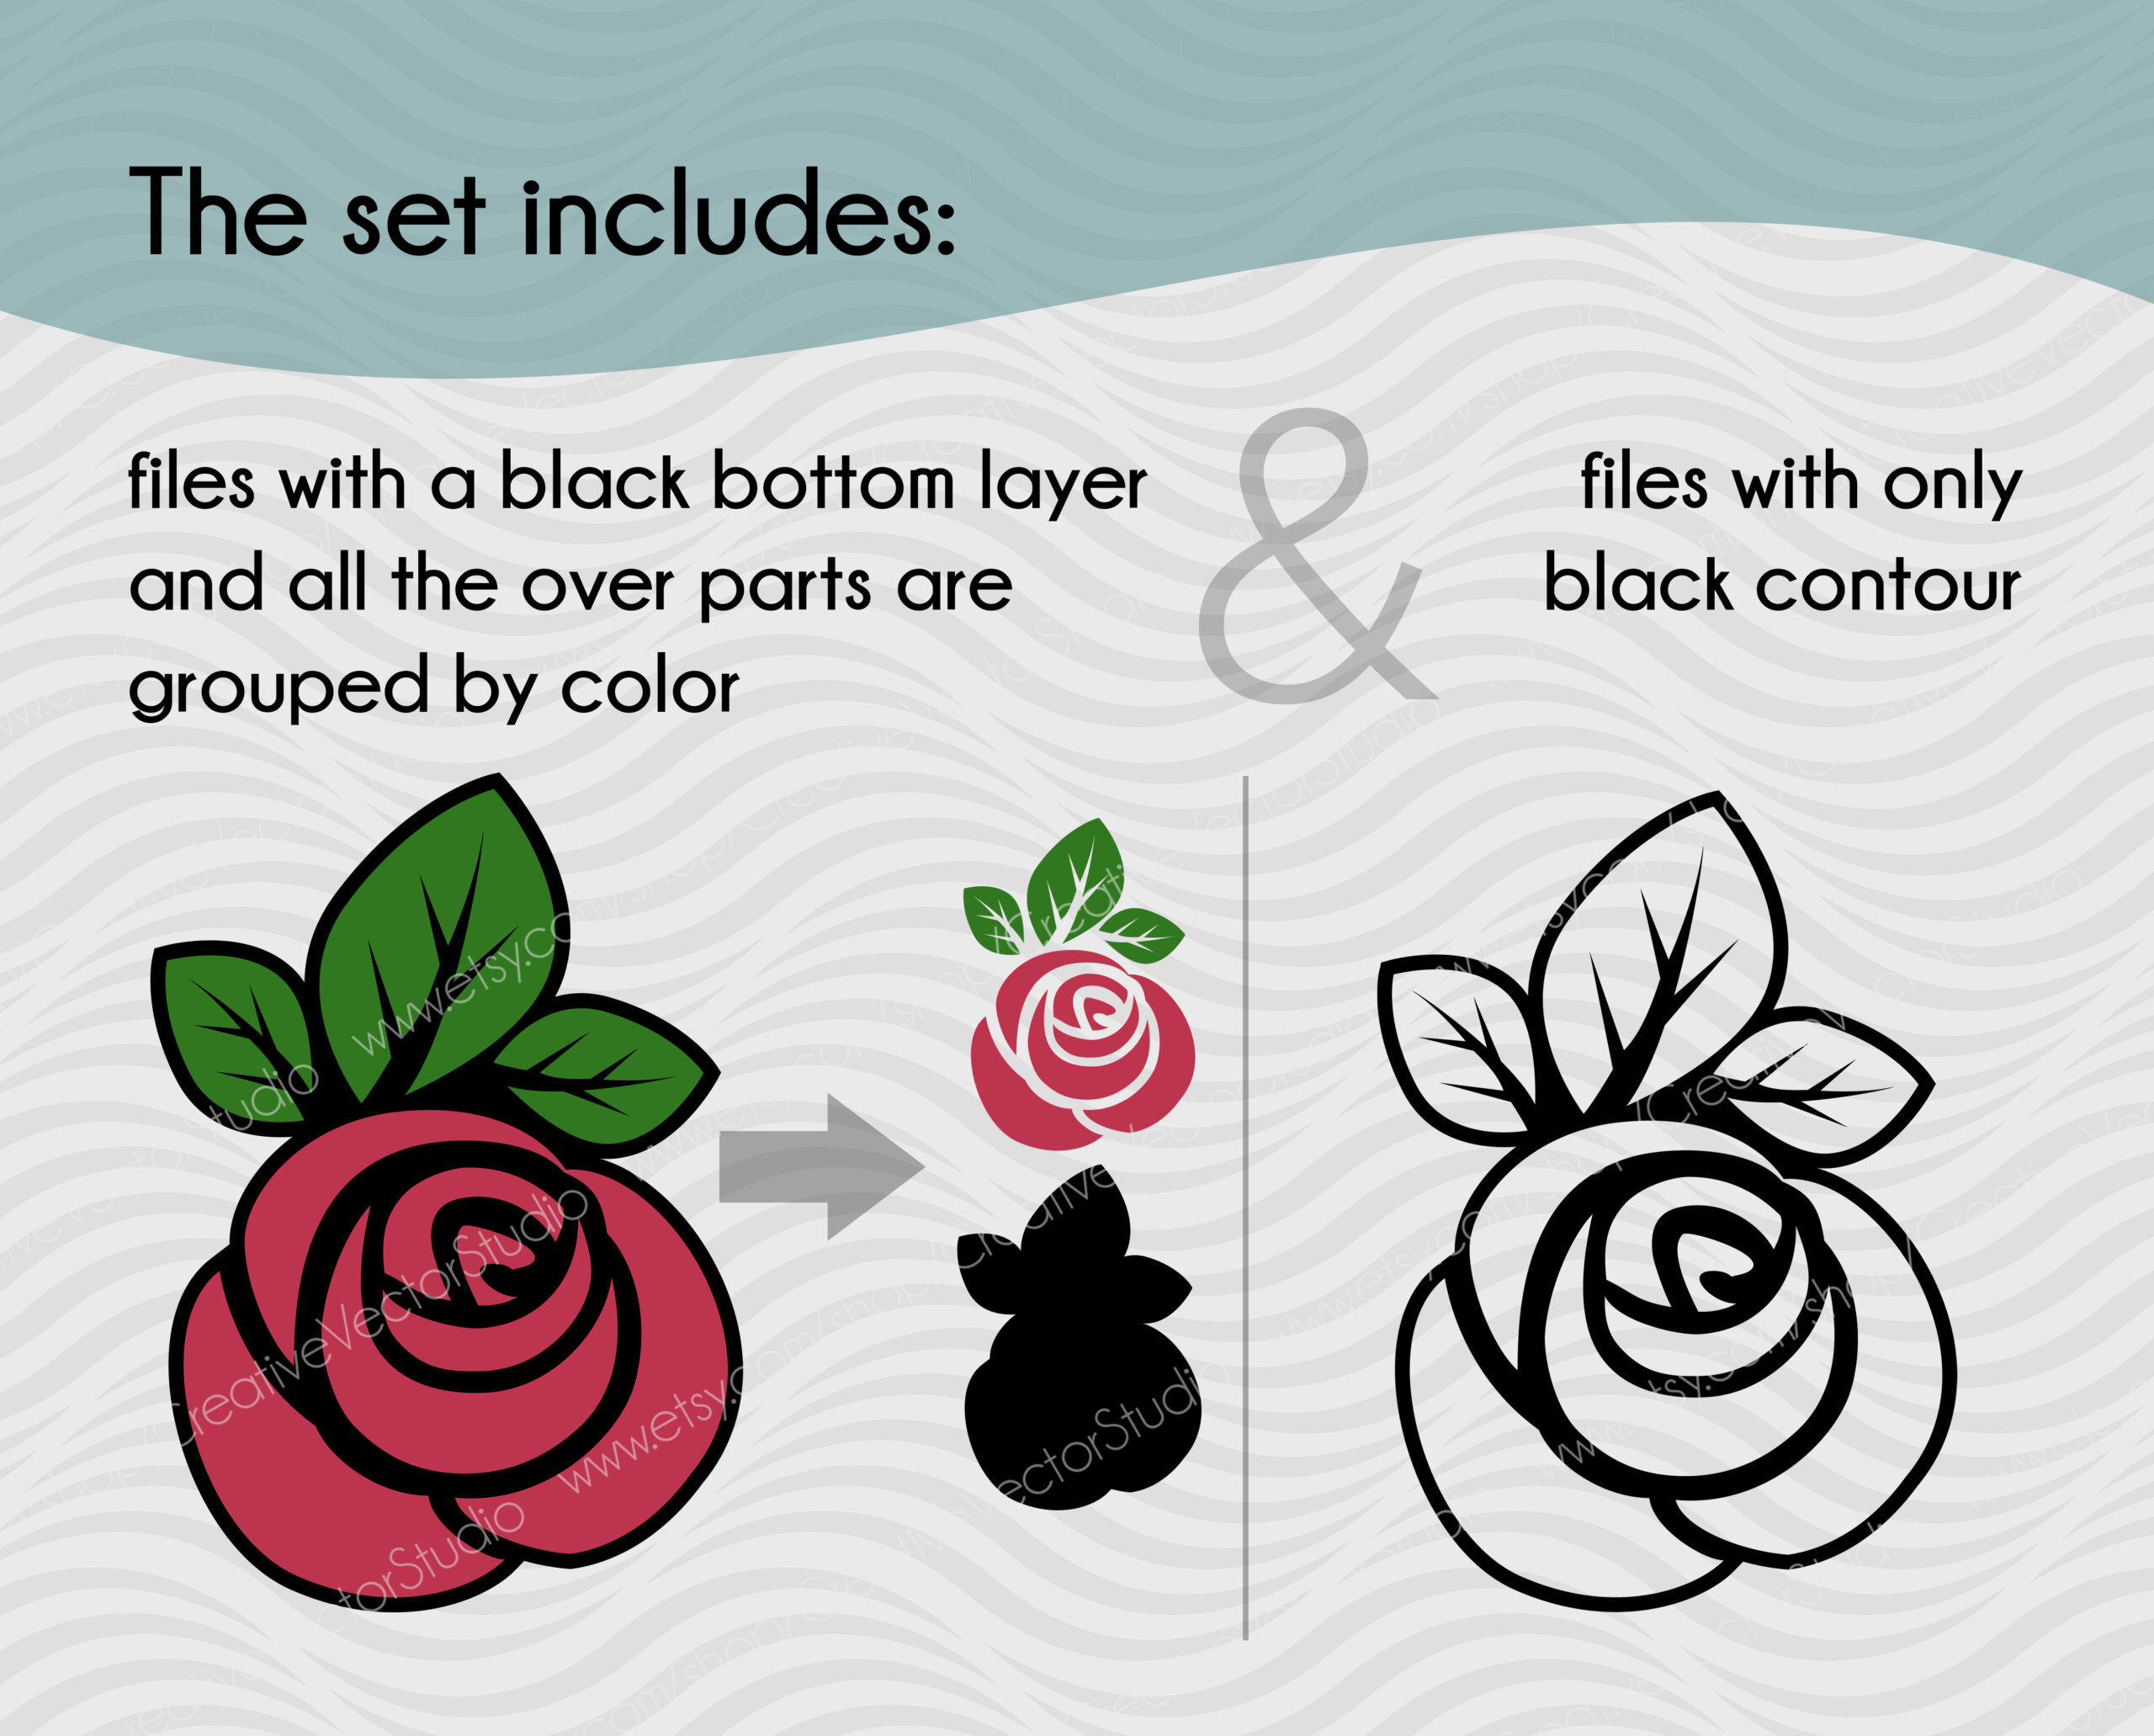 Silhouette Rose SVG Designs